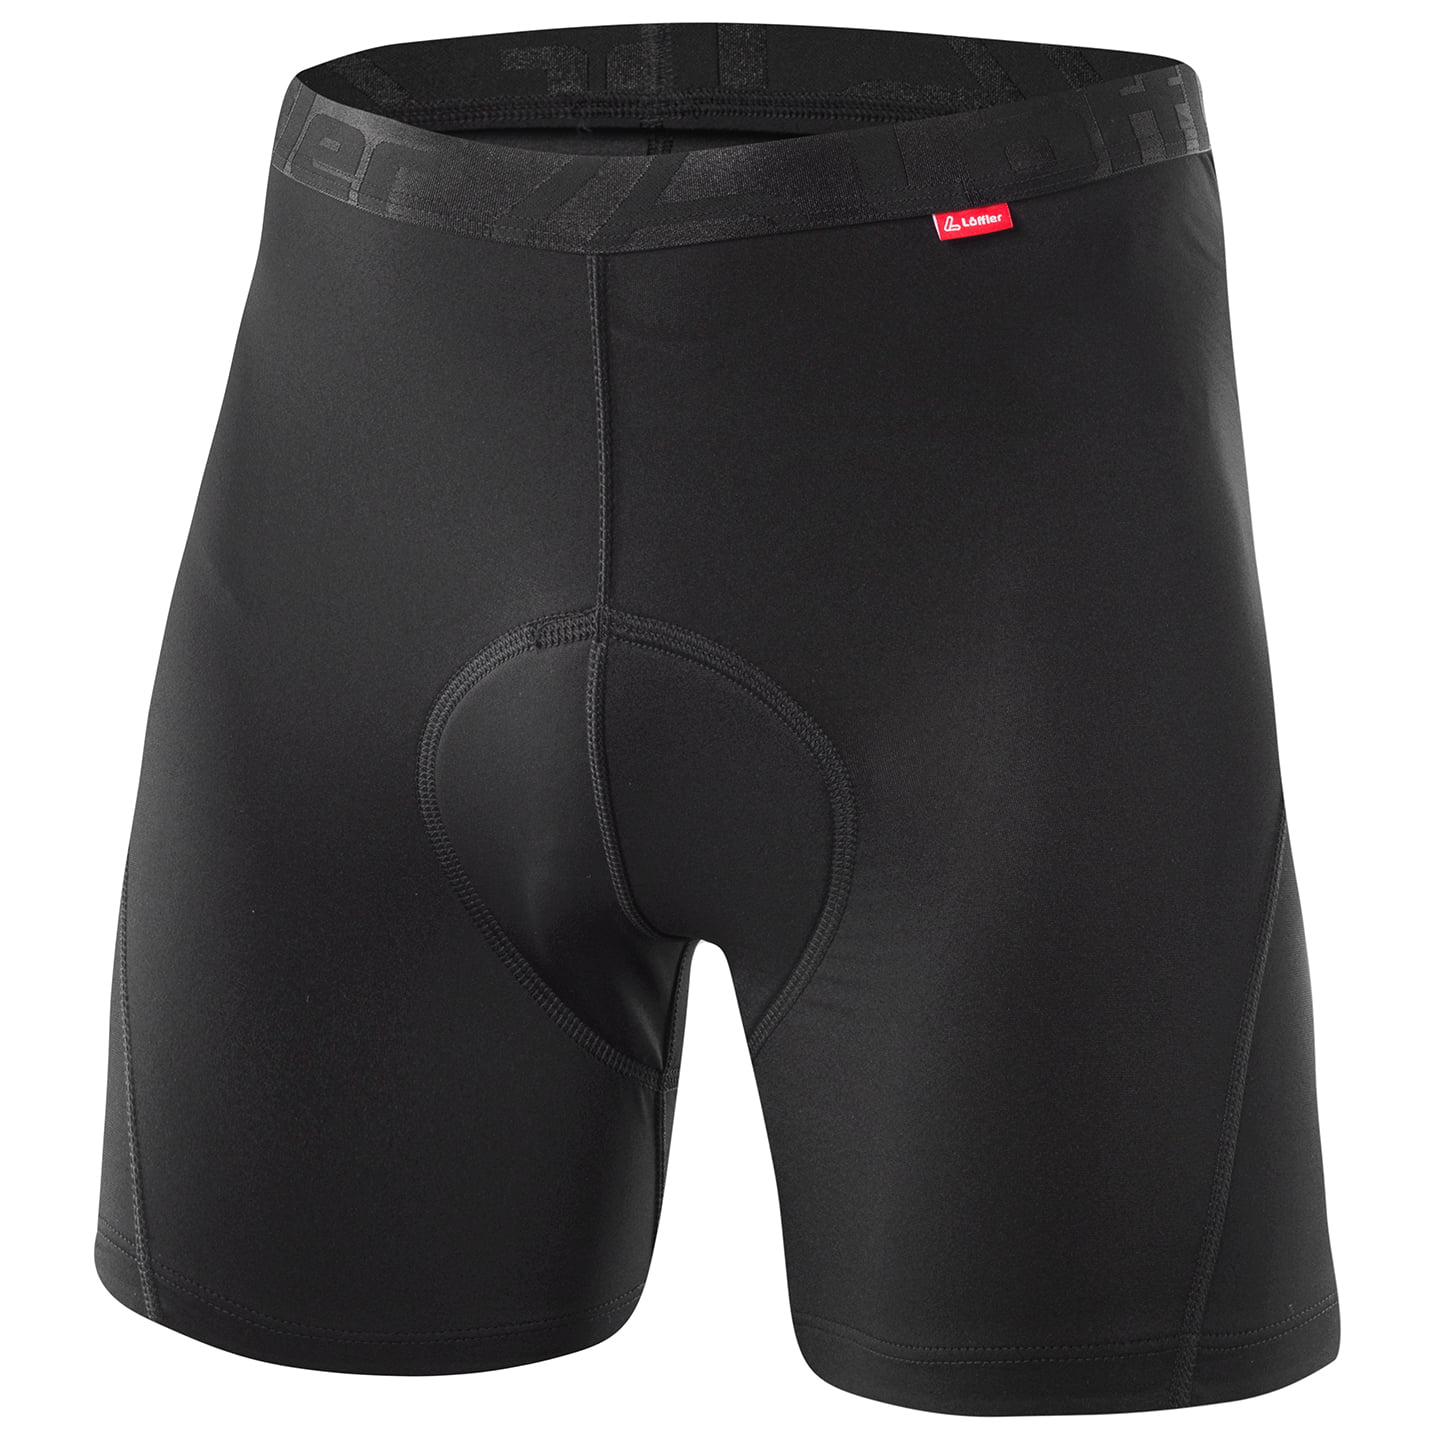 LOFFLER Liner Shorts Elastic 2.0, for men, size XL, Briefs, Cycling clothing